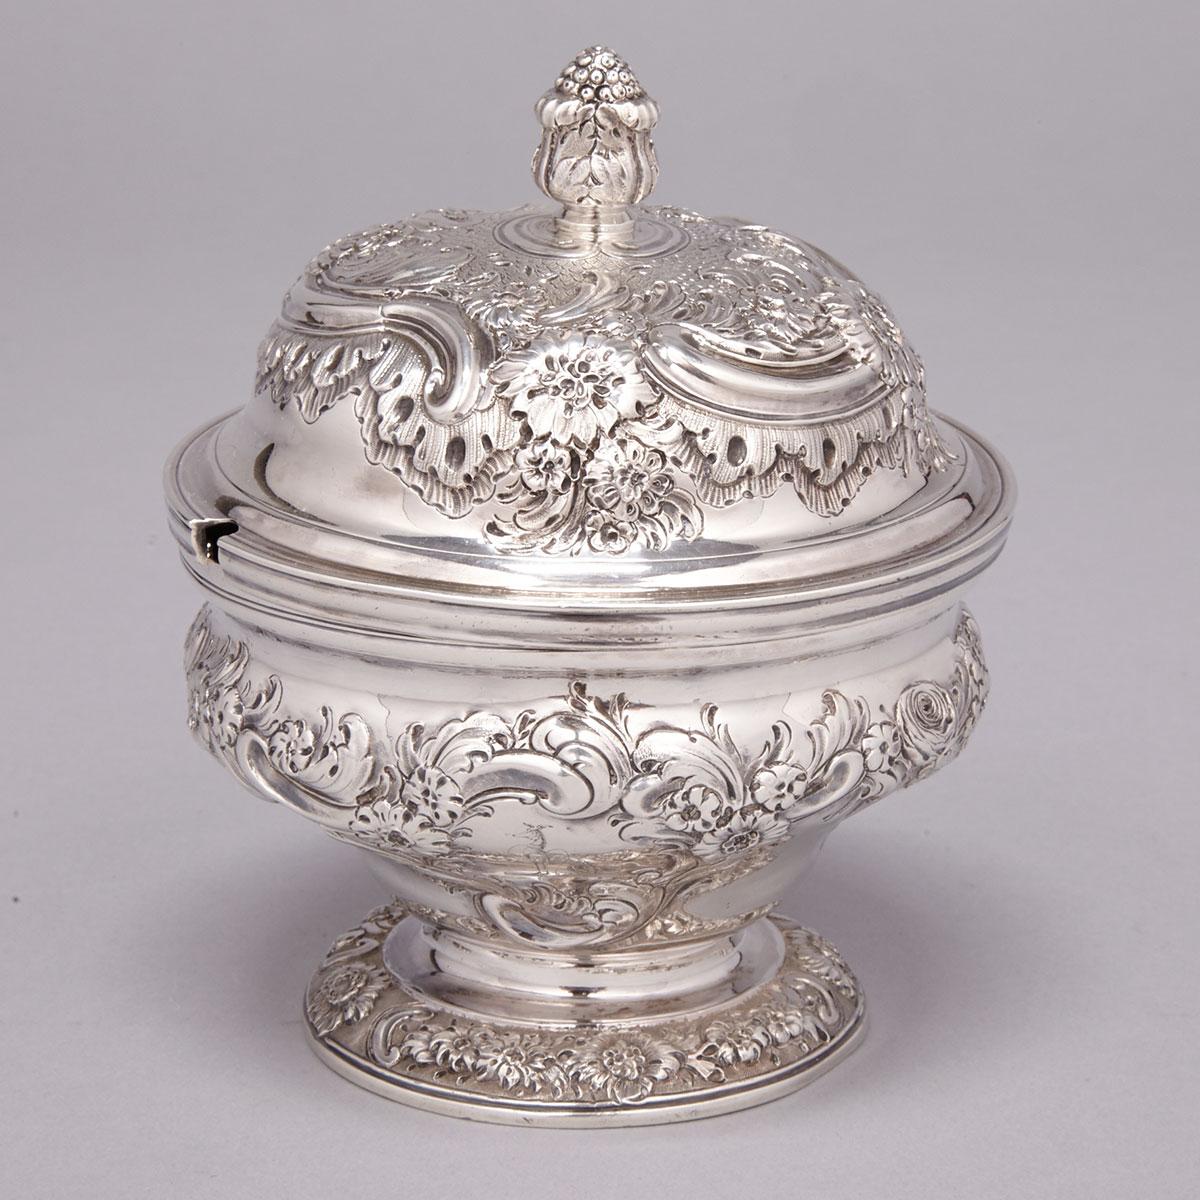 George II Silver Covered Sugar Bowl, Henry Morris, London, 1749